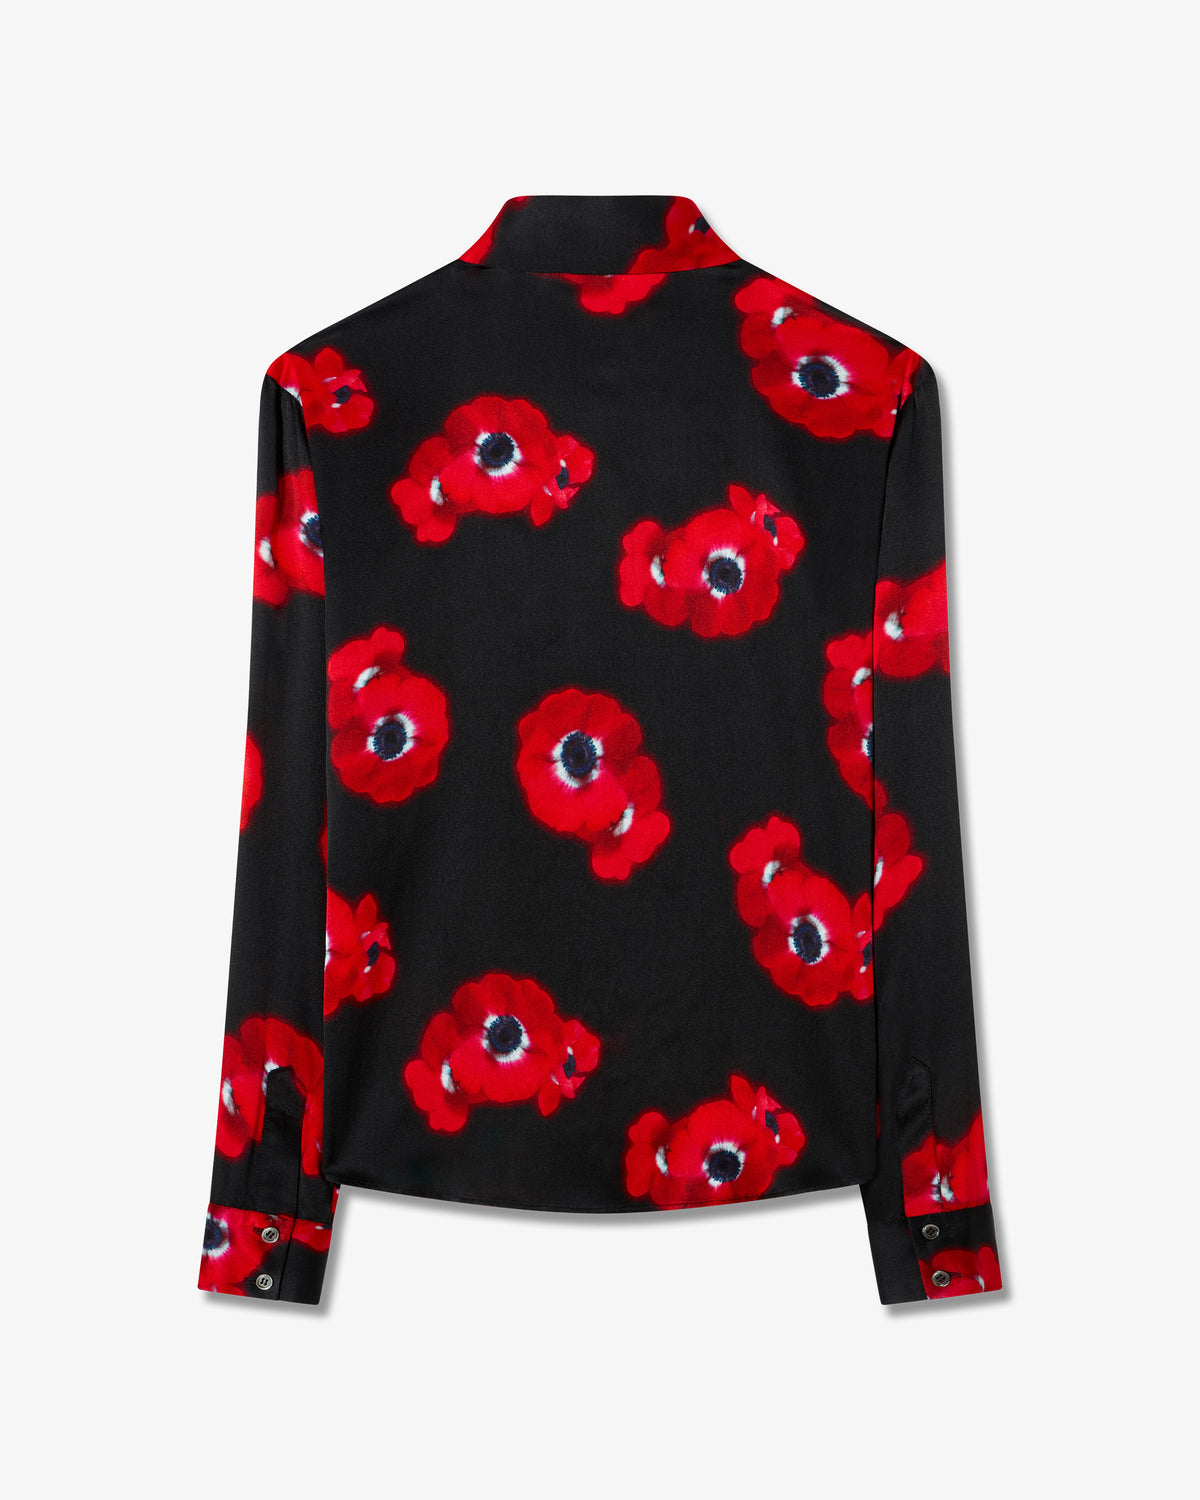 Graphic Poppy City Shirt - Black/Red